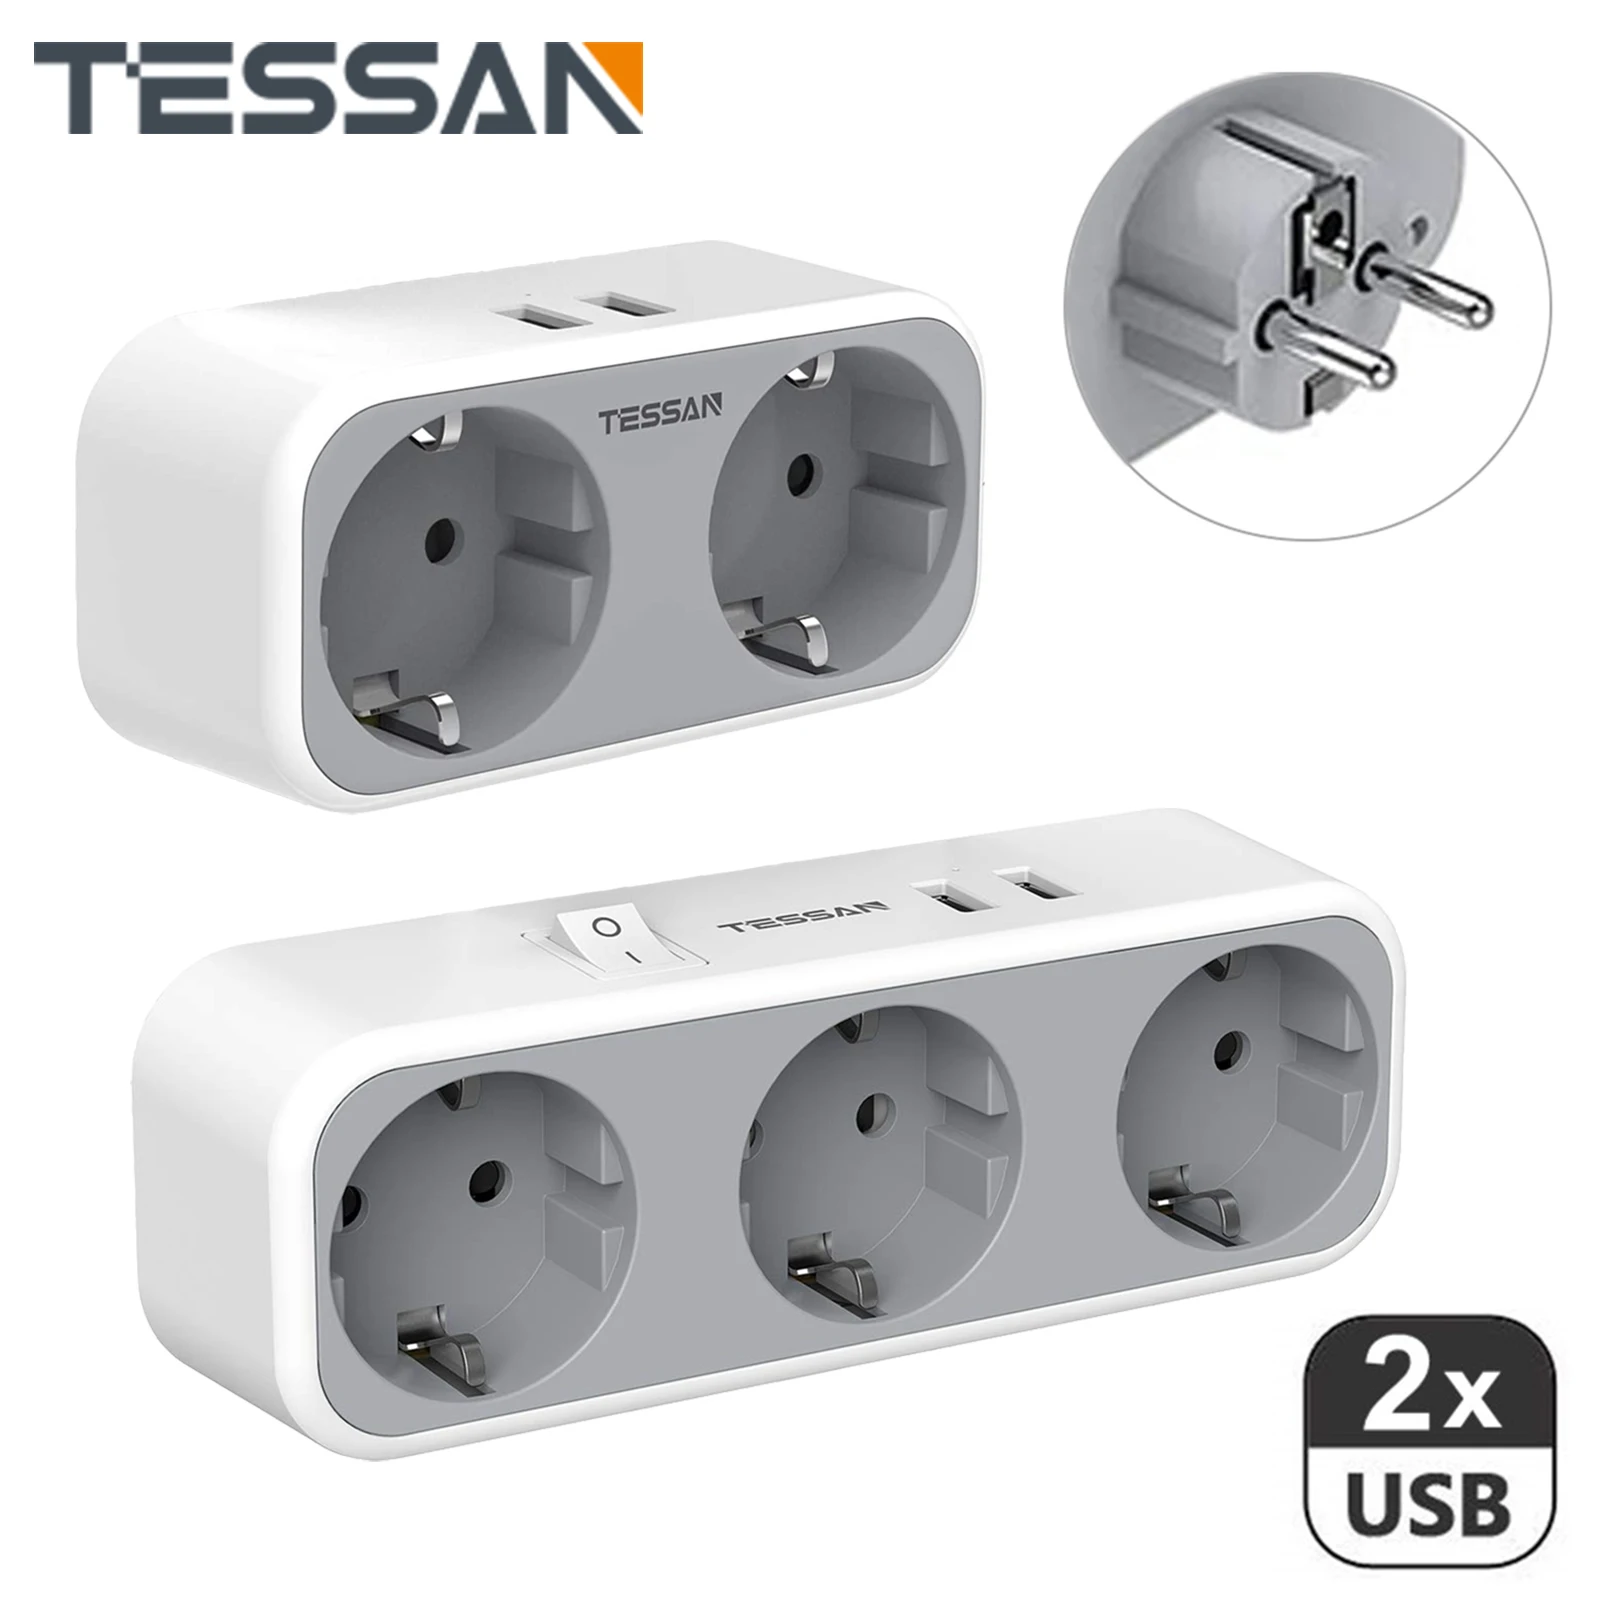 TESSAN Ladron Plano Moderno de Enchufes Multiples con 3 Shucko y 2 USB,  para Cocina, Hogar, Blanco y Gris : : Electrónica